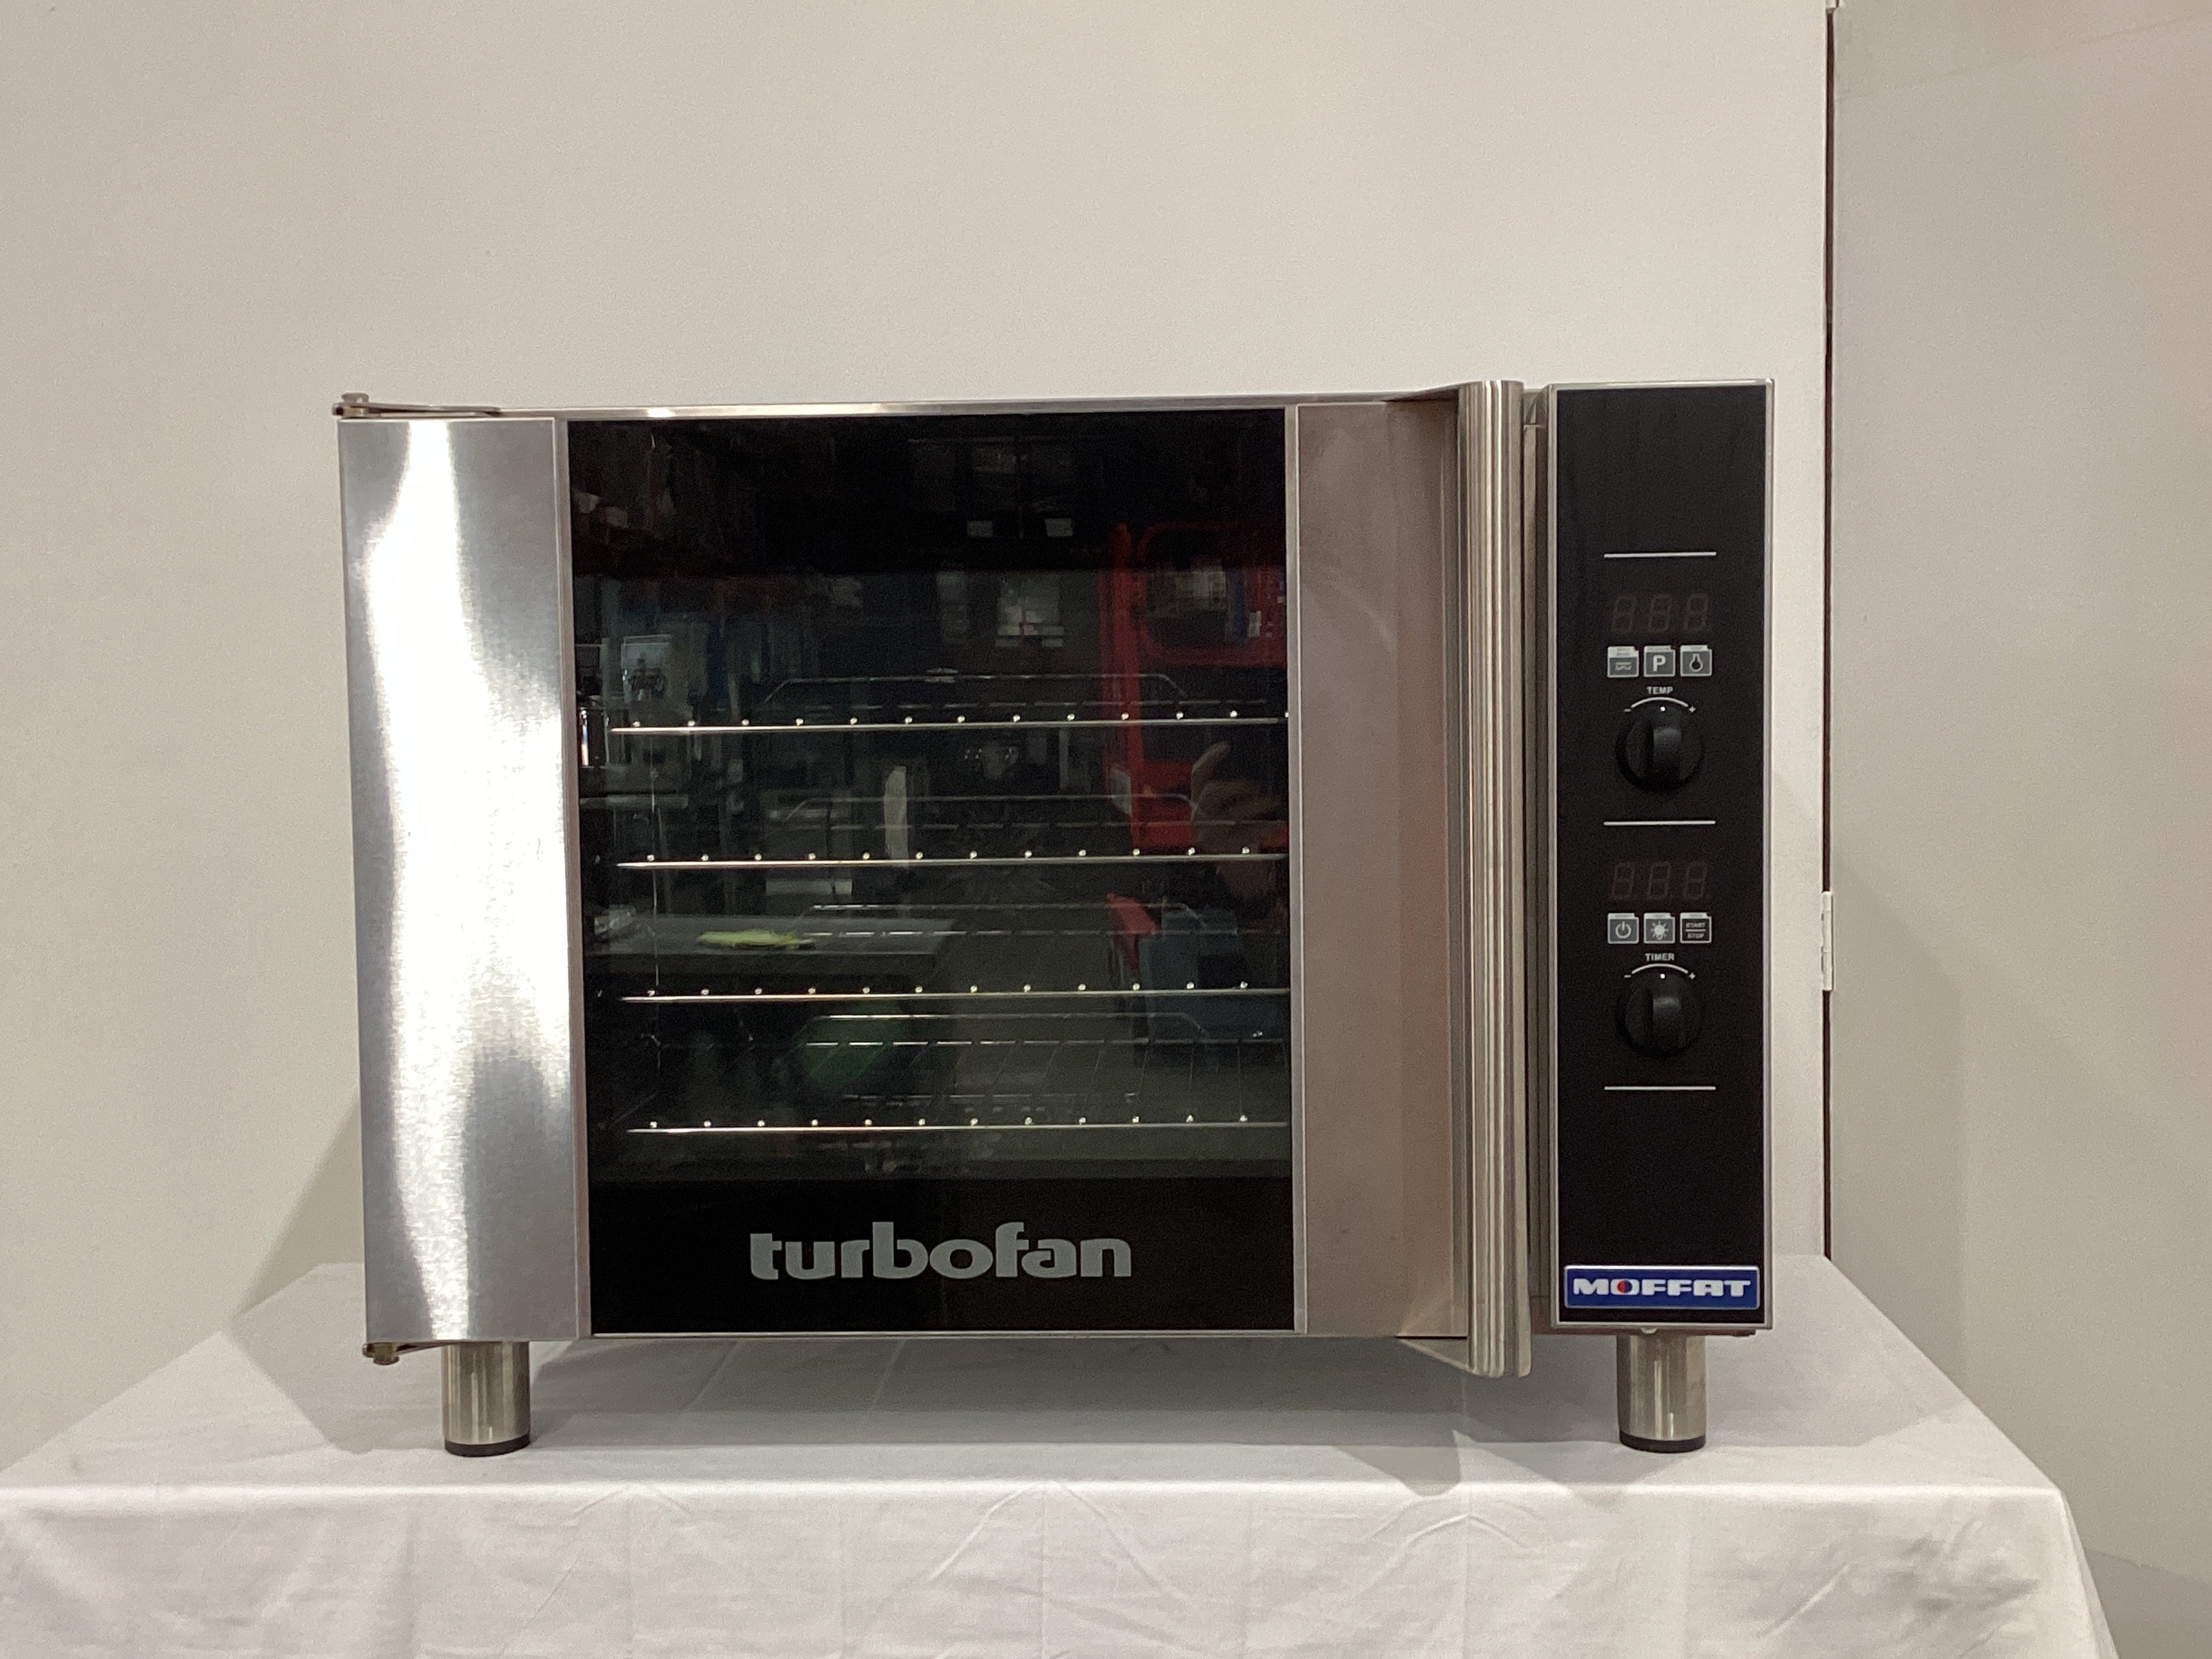 Thumbnail - Turbofan E31D4 Convection Oven